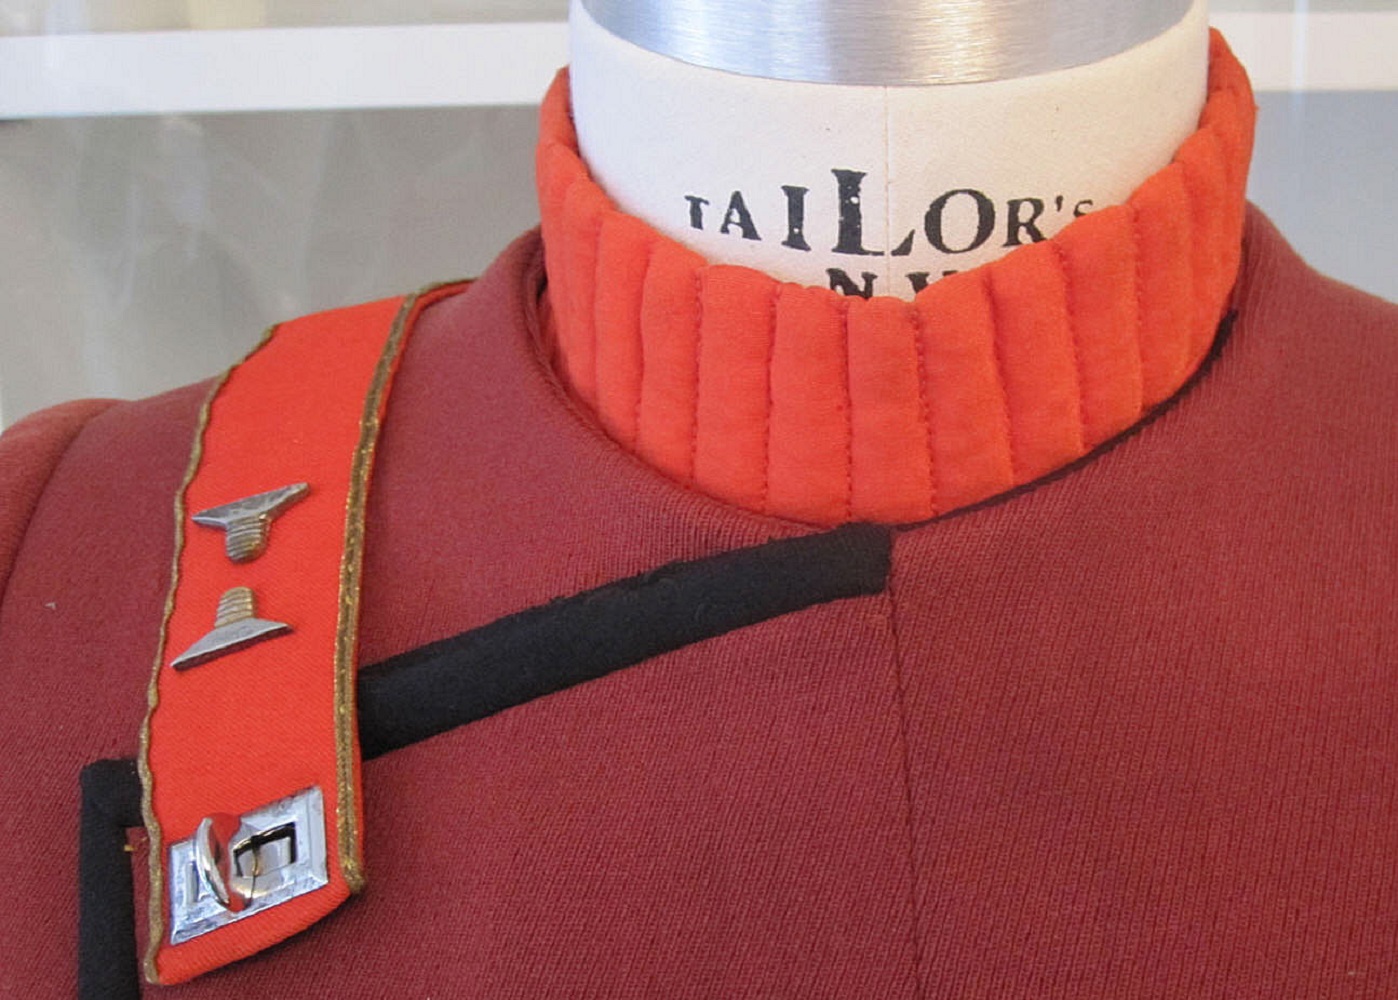 TWOK trainee collar - Star Trek Costume Guide